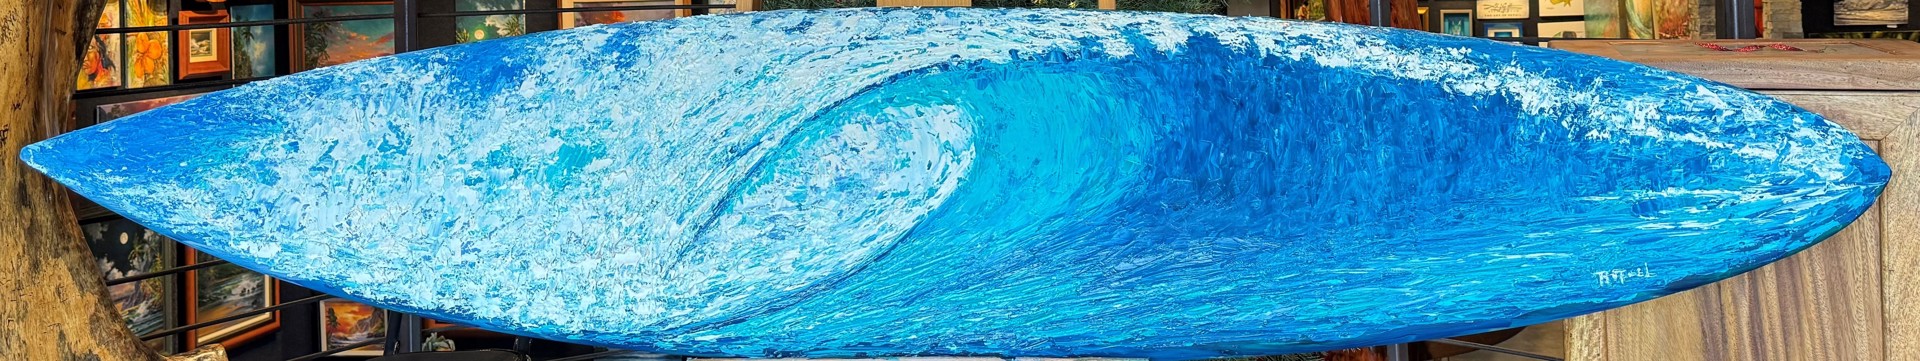 Pipeline Wave Surfboard by Rafael Pereda